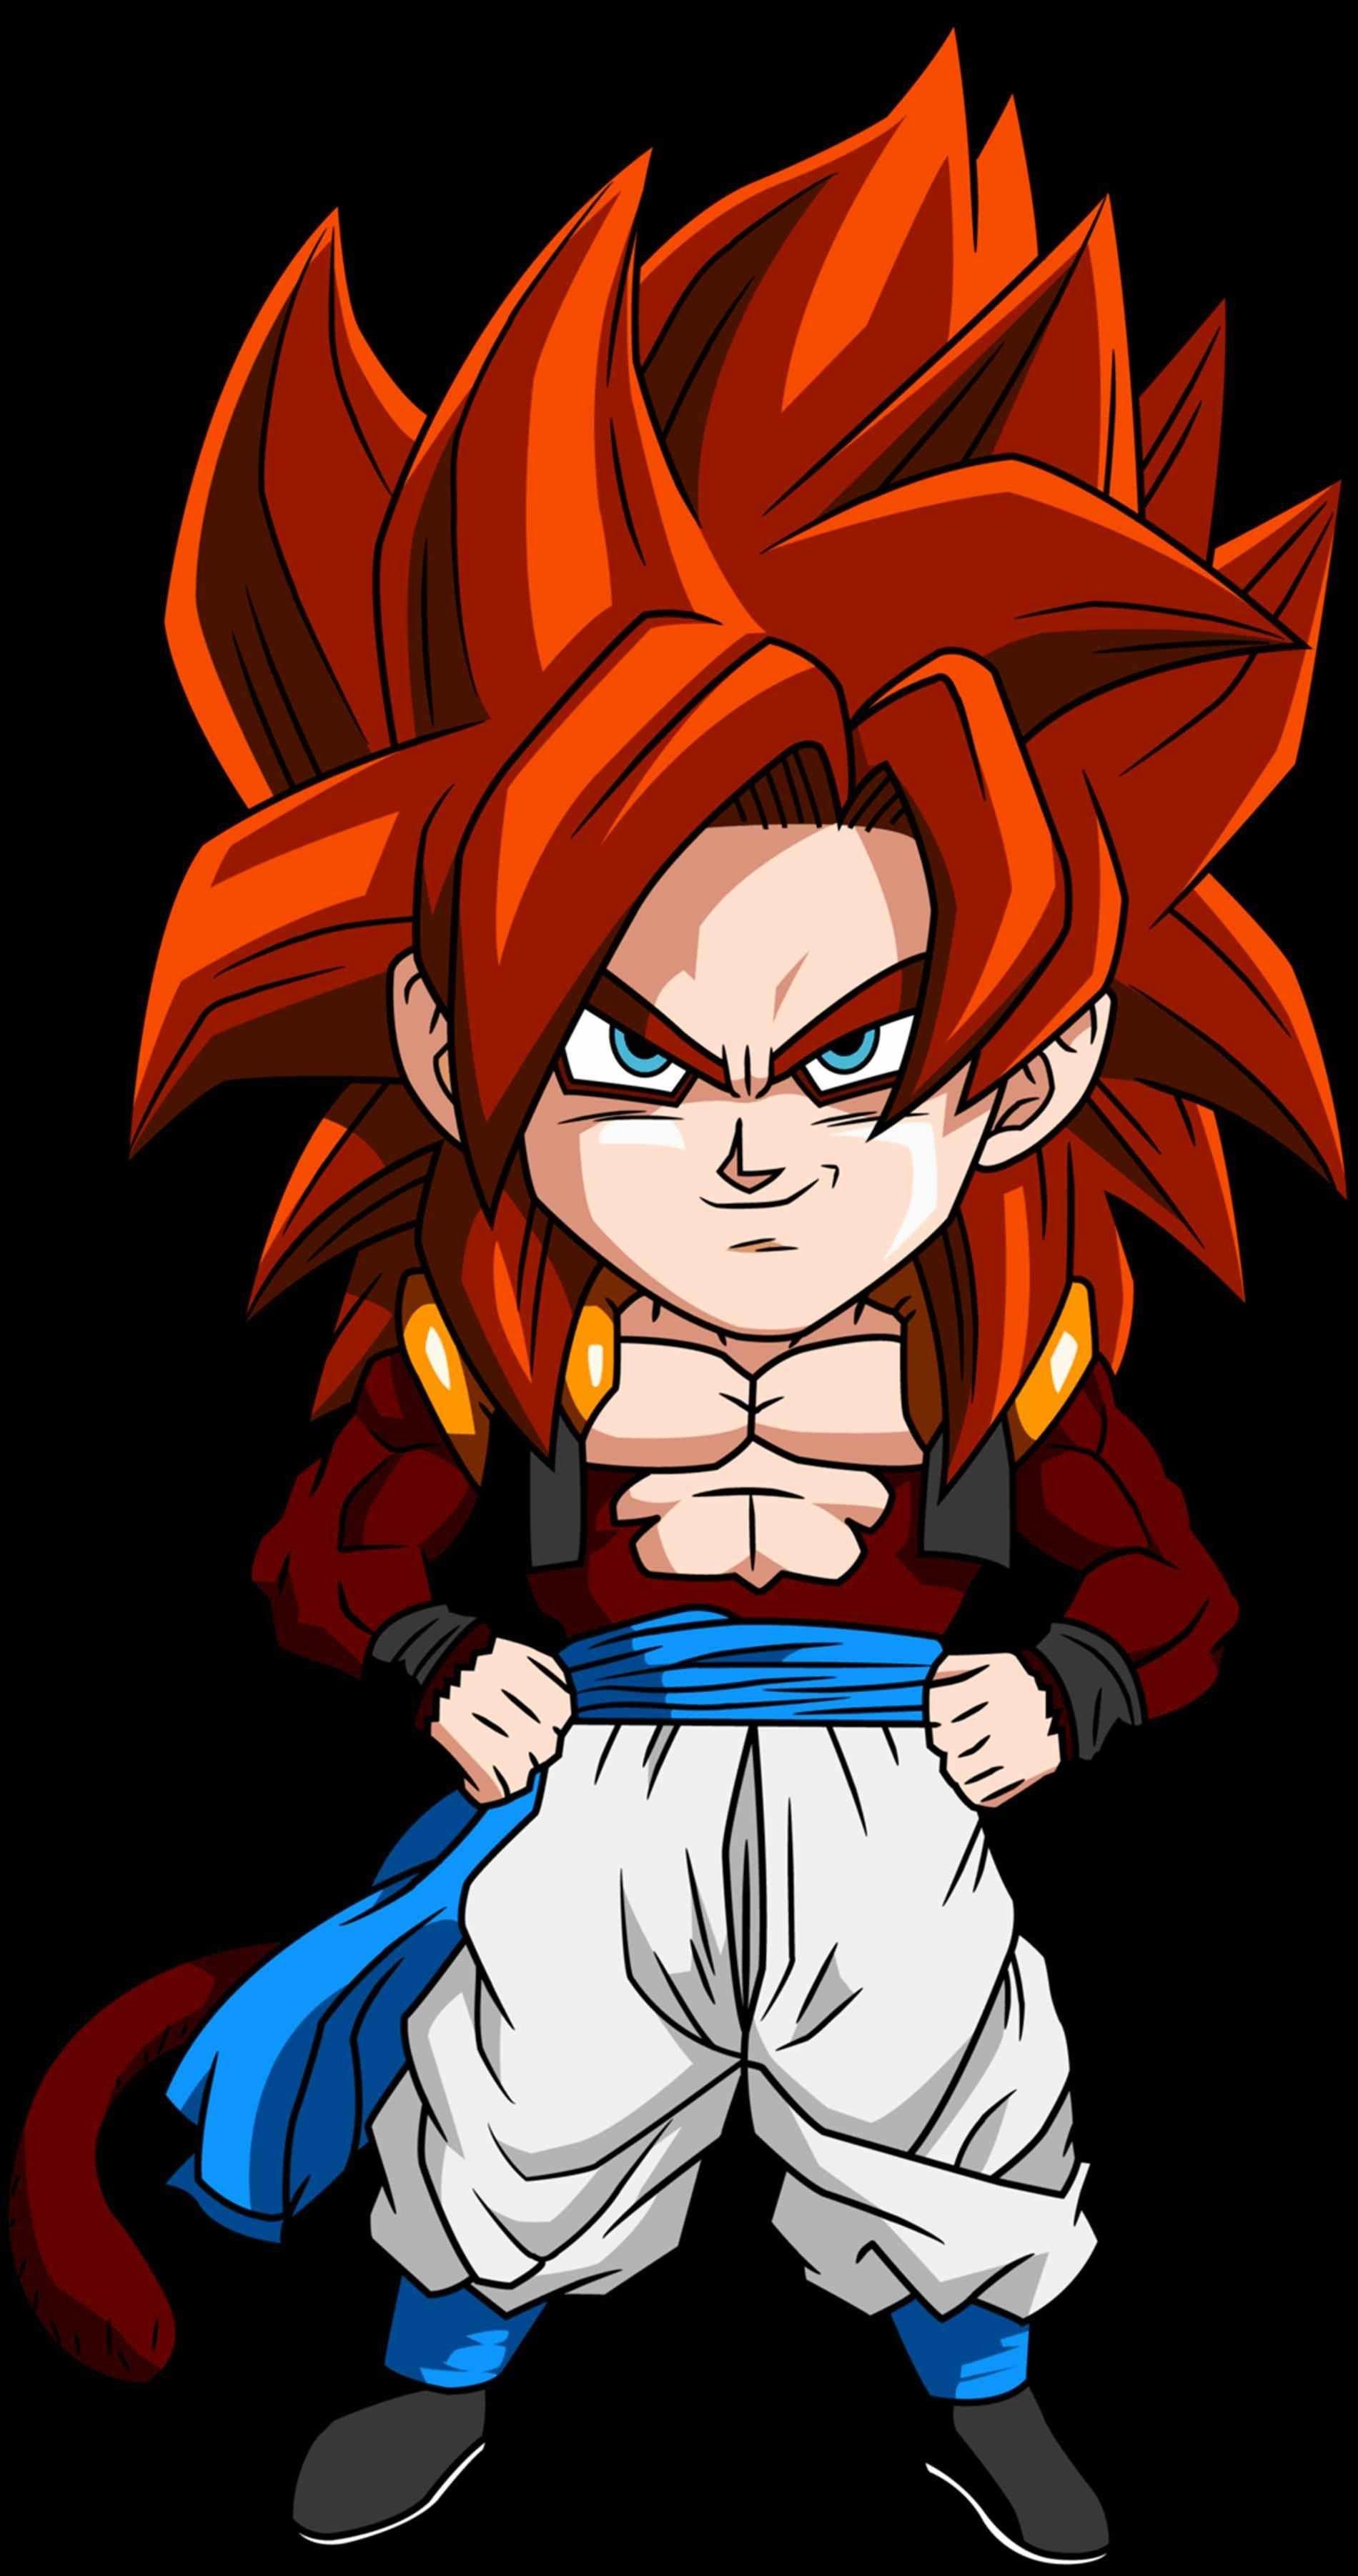 Super Saiyan 4 Goku Dragon Ball GT art from Dragon Ball Legends  AndroidIPhone 2K wallpaper download